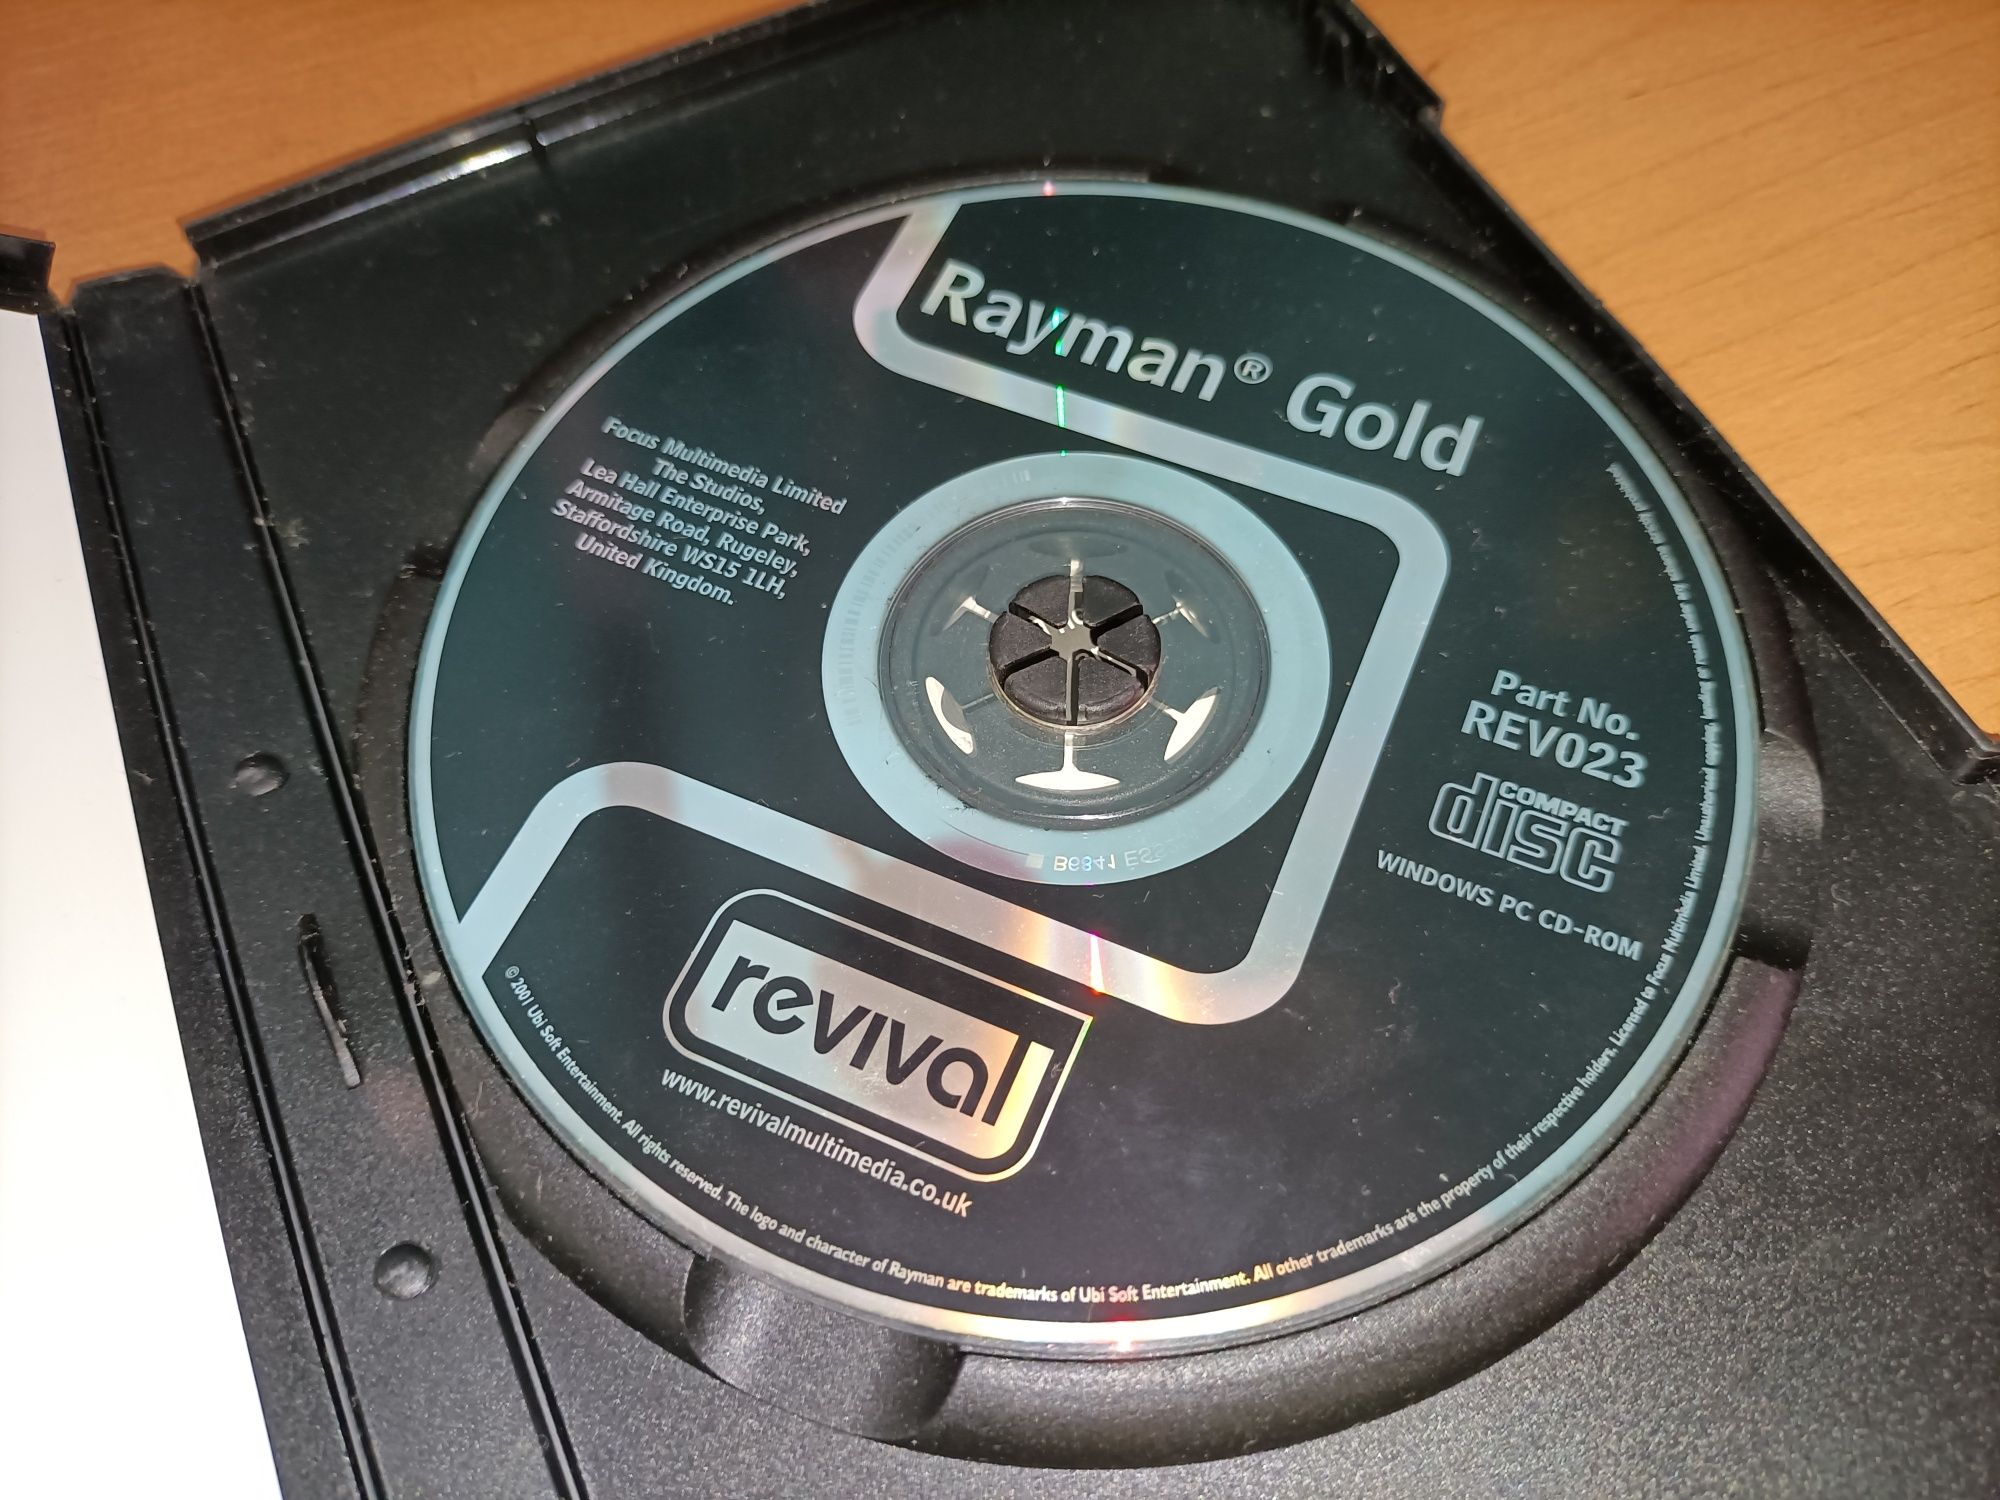 Rayman Gold_PC CD-ROM